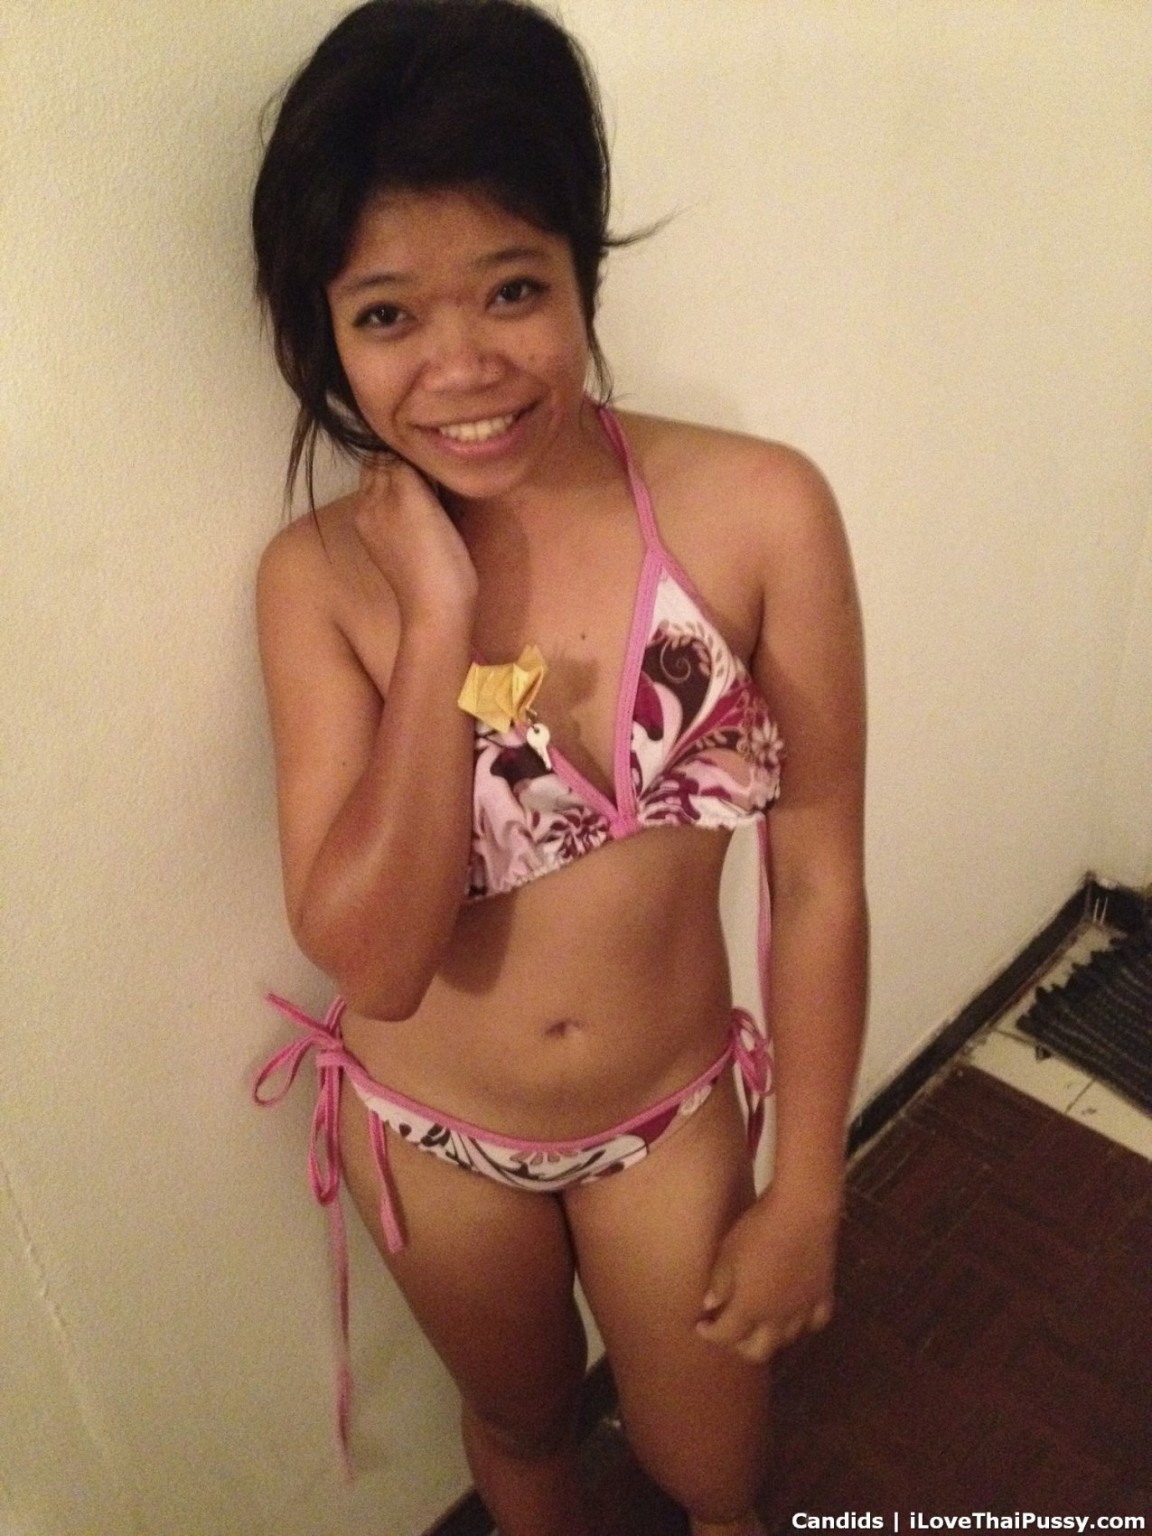 Calda prostituta di strada thai teenager che mostra la sua tenera figa asiatica
 #67940027